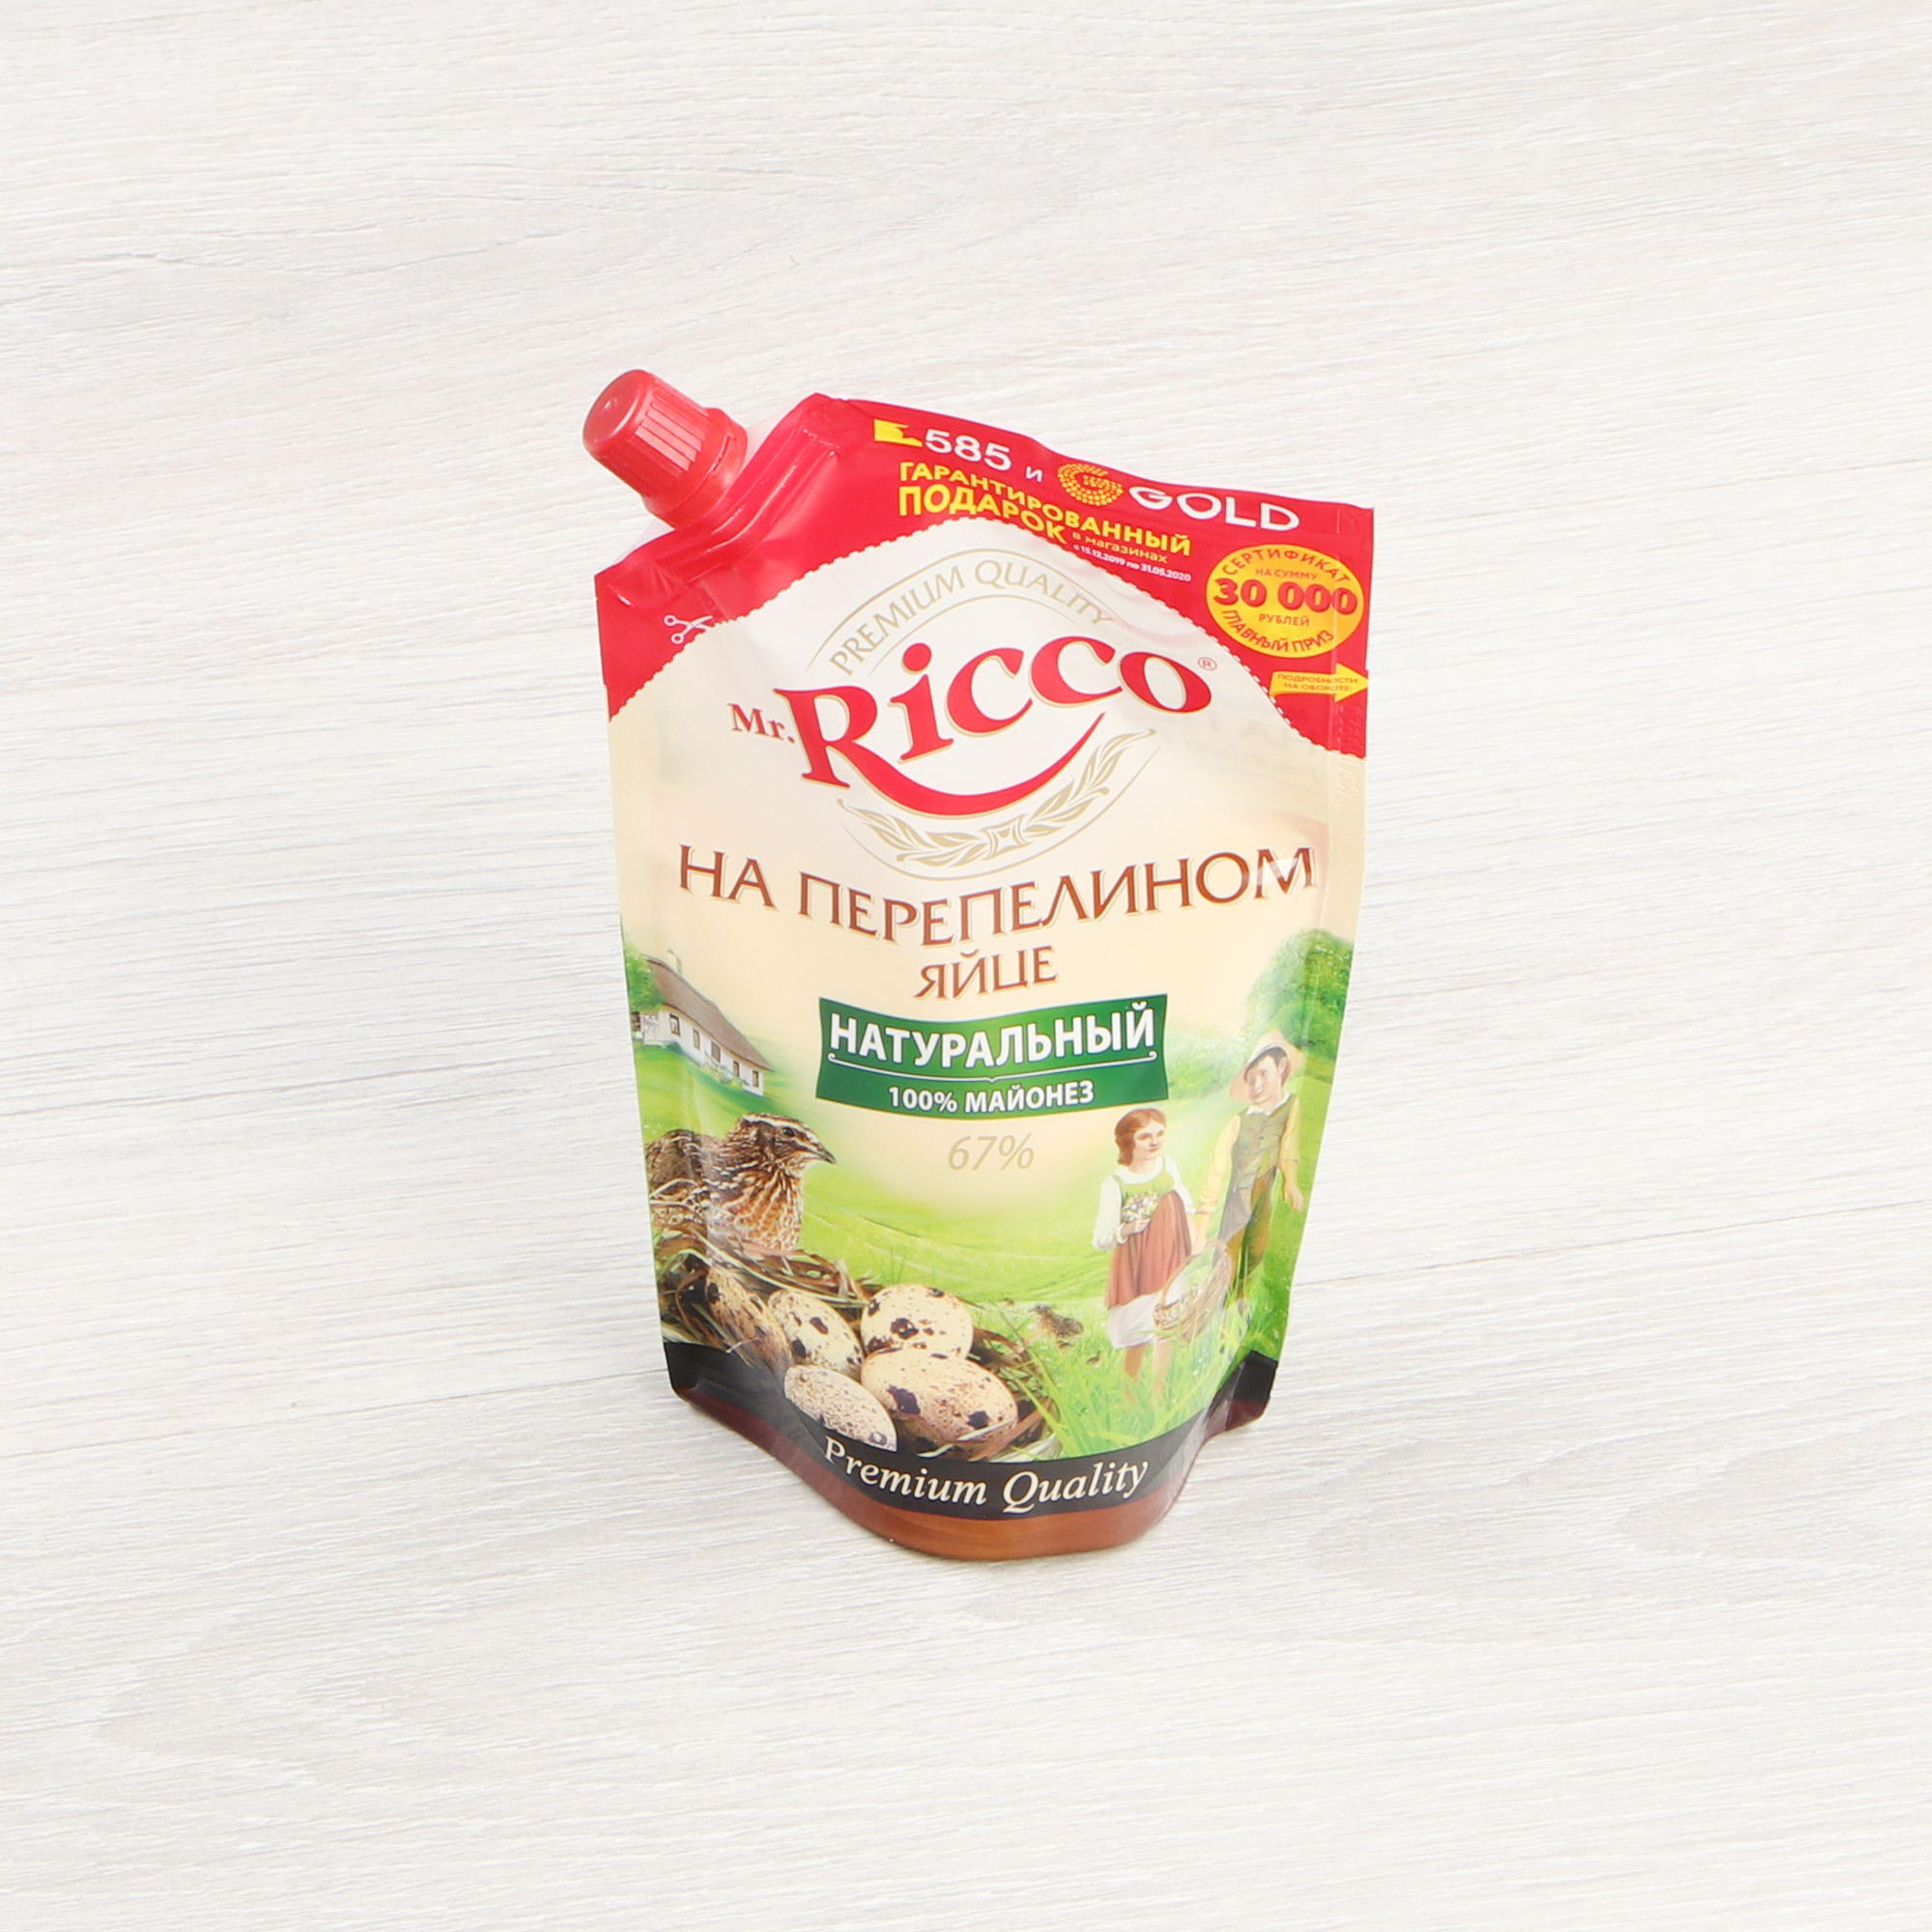 Майонез Mr.Ricco Organic перепелиное яйцо 67% 400 мл майонез слобода на перепелиных яйцах 400 мл